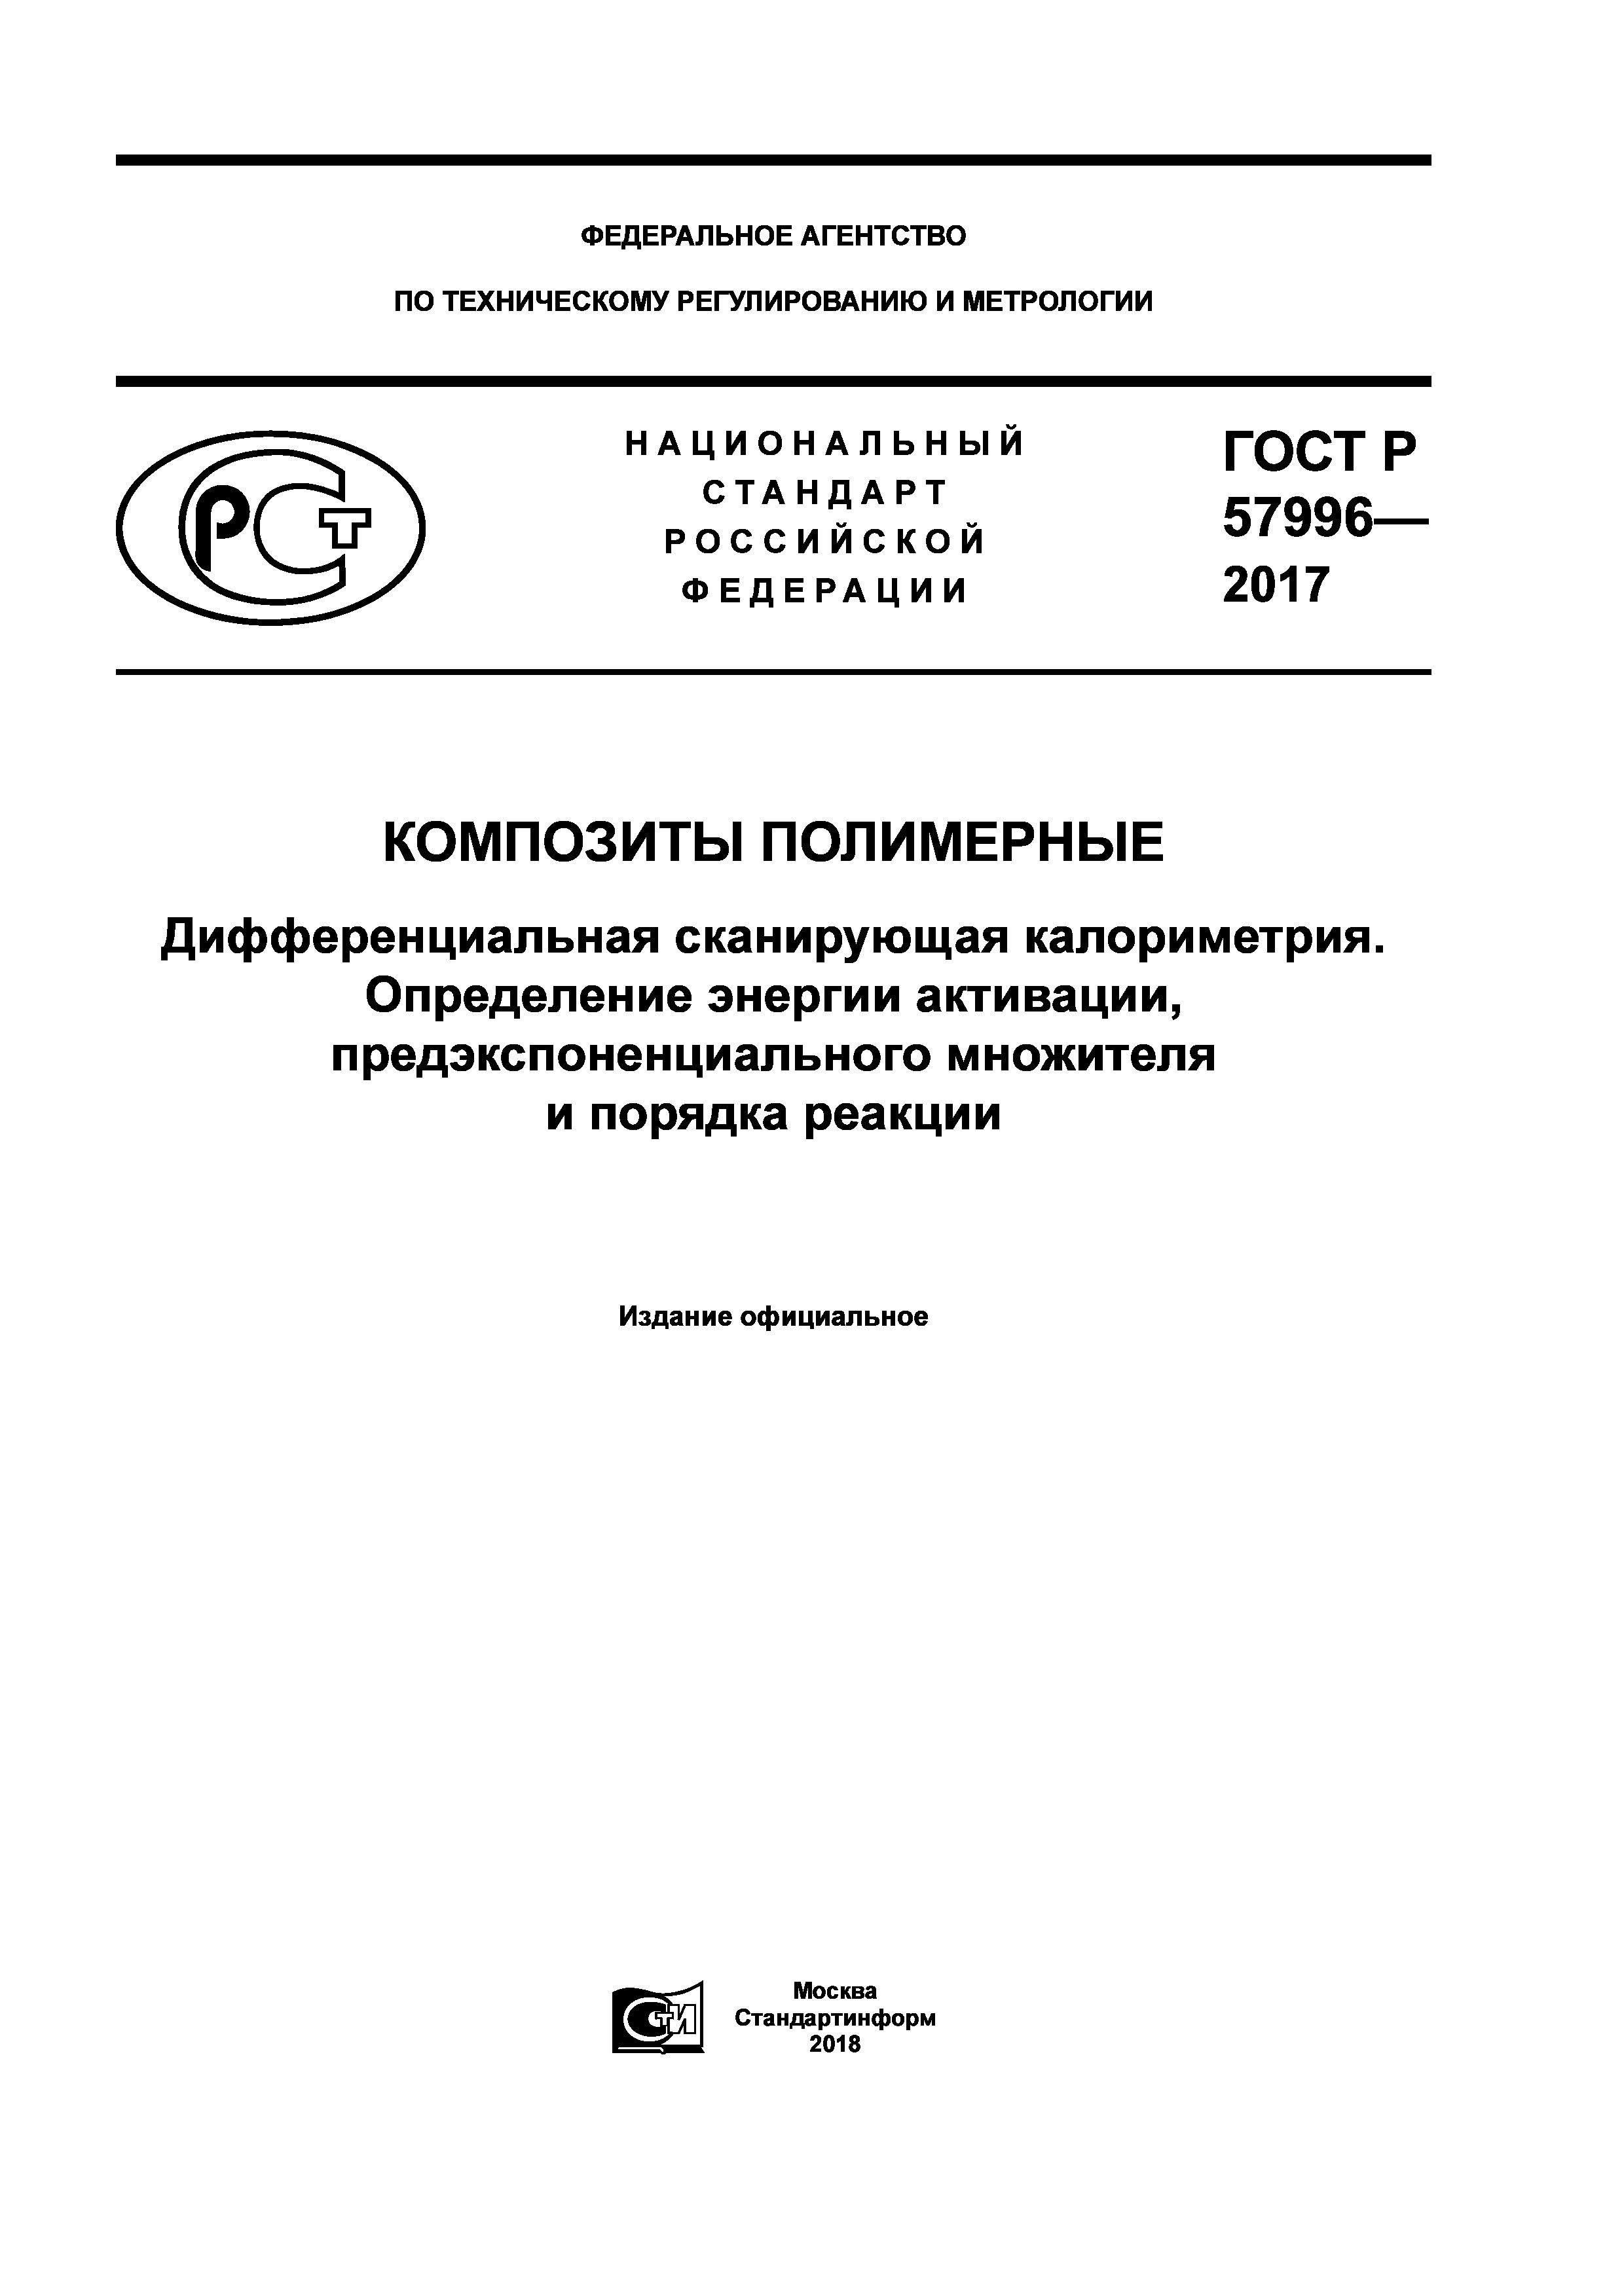 ГОСТ Р 57996-2017